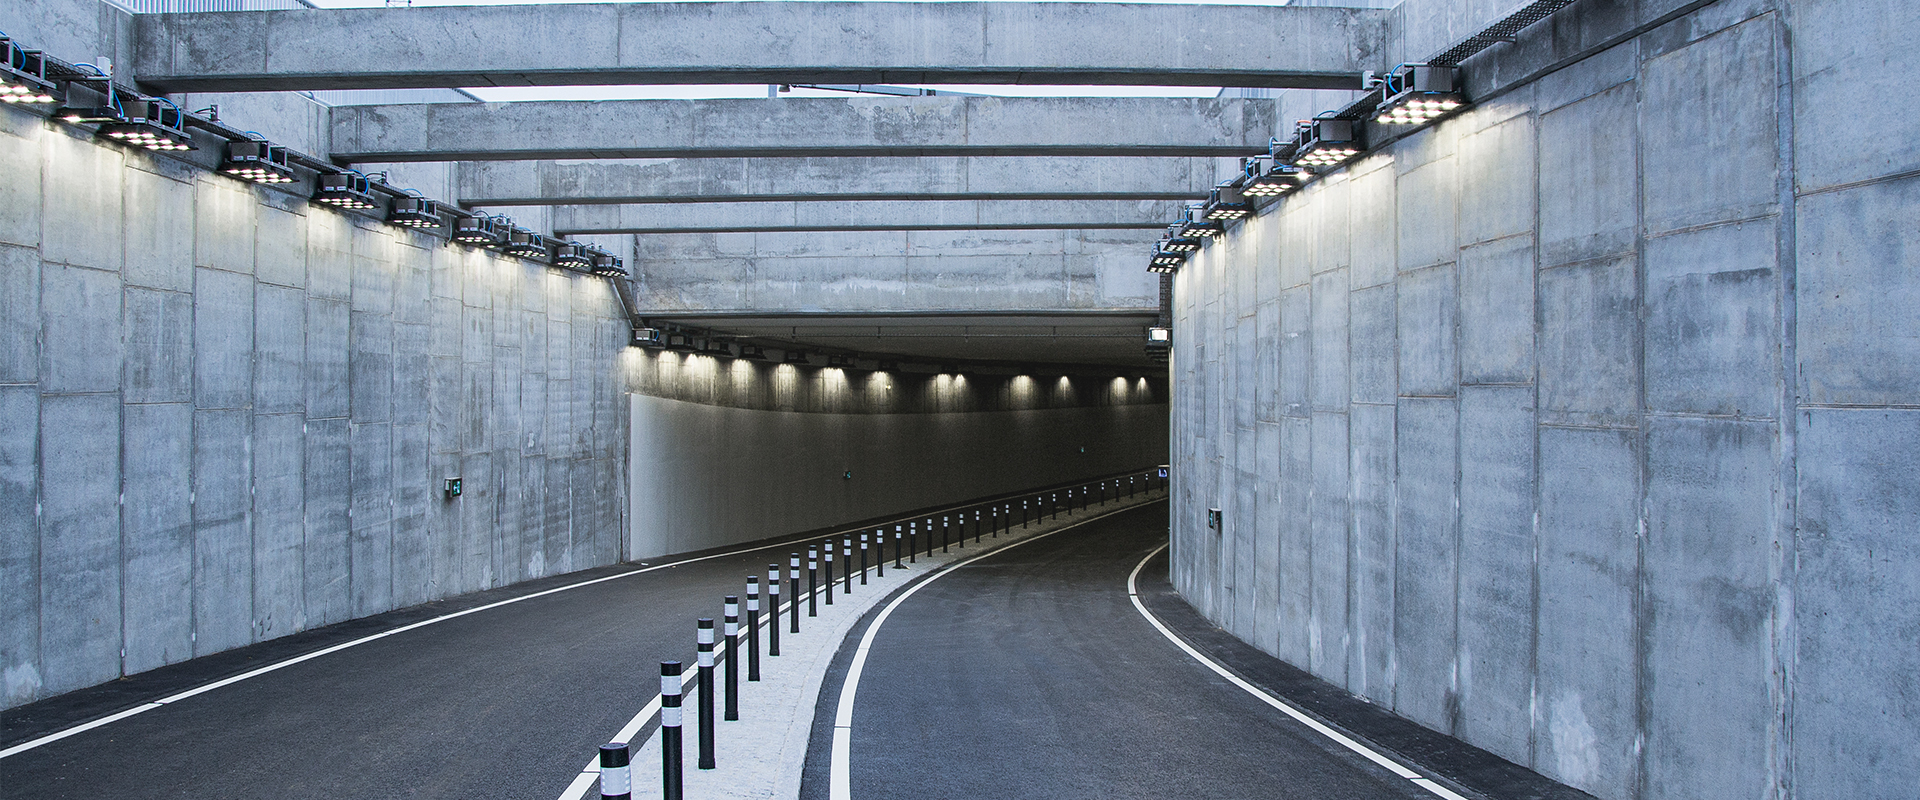 LED Tunnel lighting